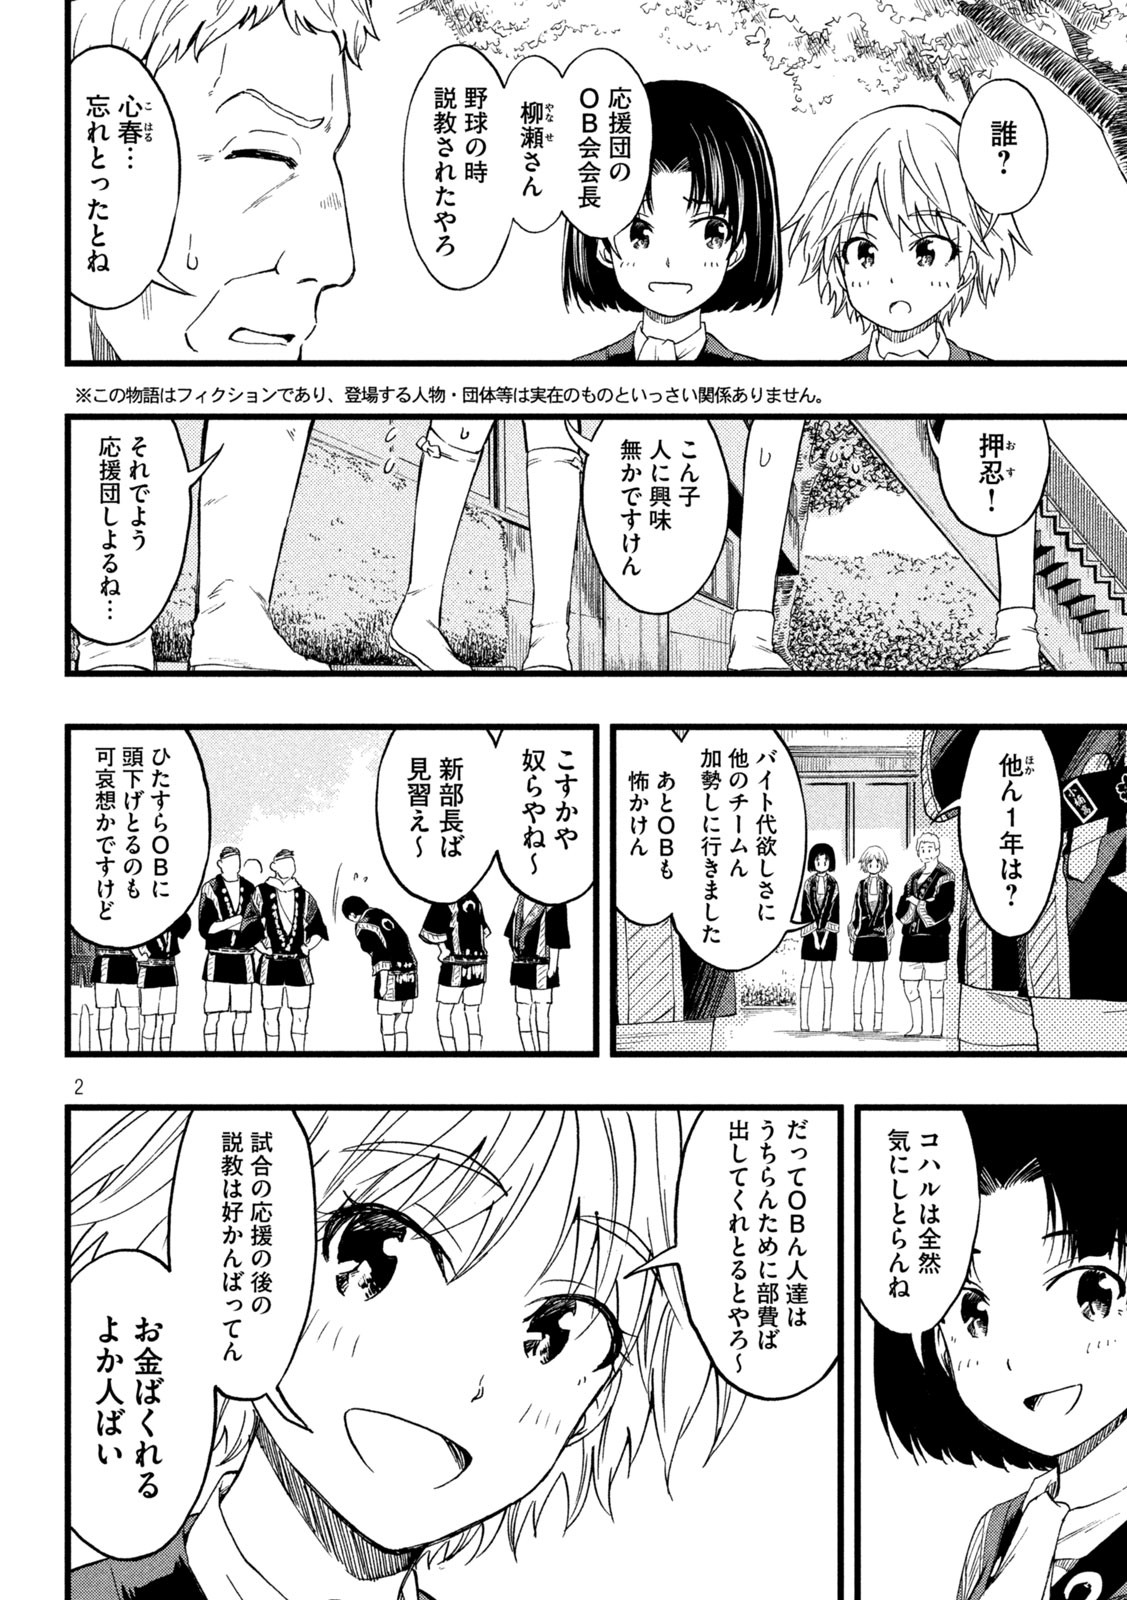 Koharu haru! - Chapter 54 - Page 2